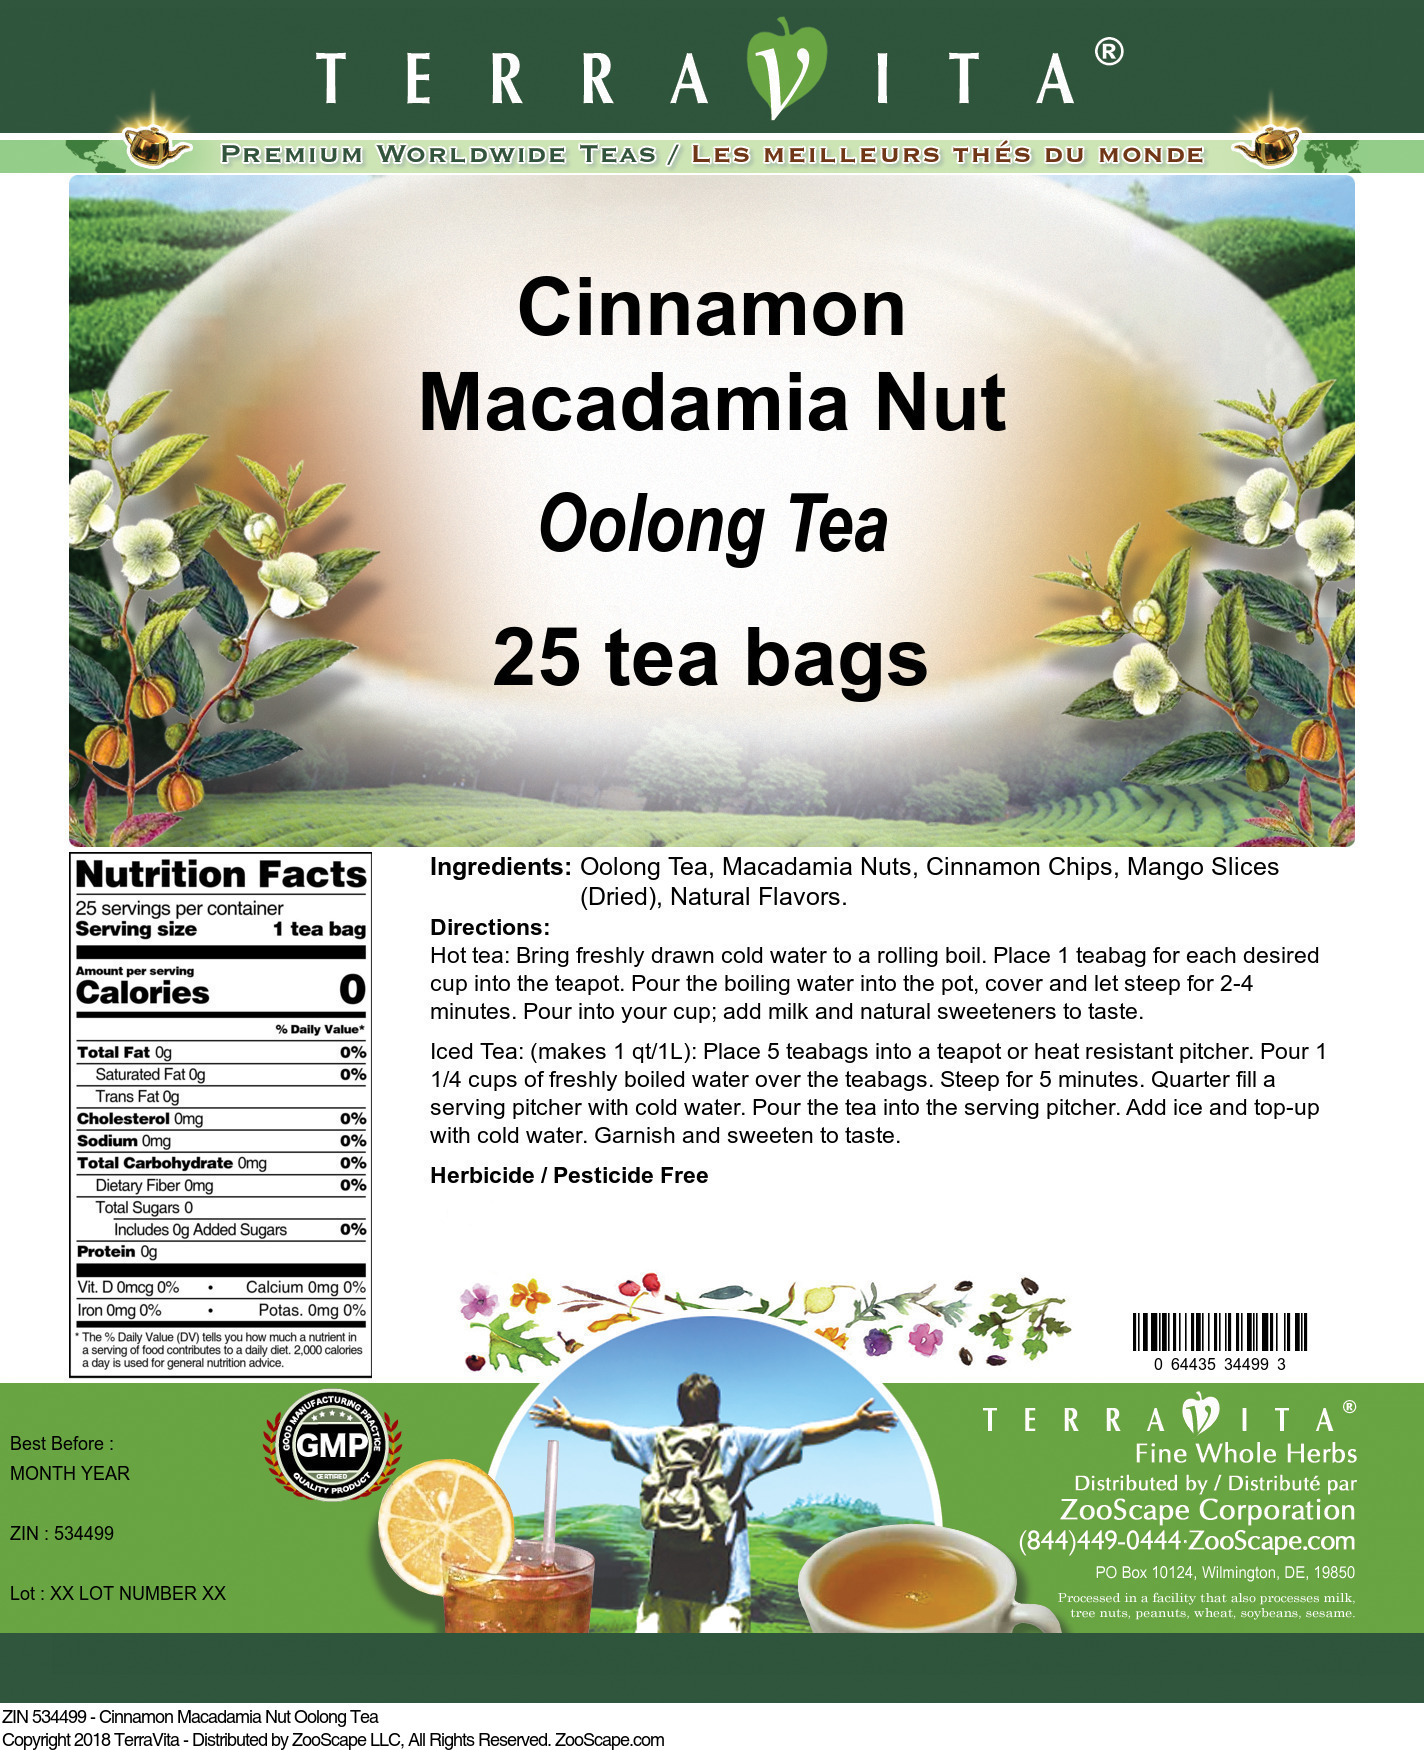 Cinnamon Macadamia Nut Oolong Tea - Label